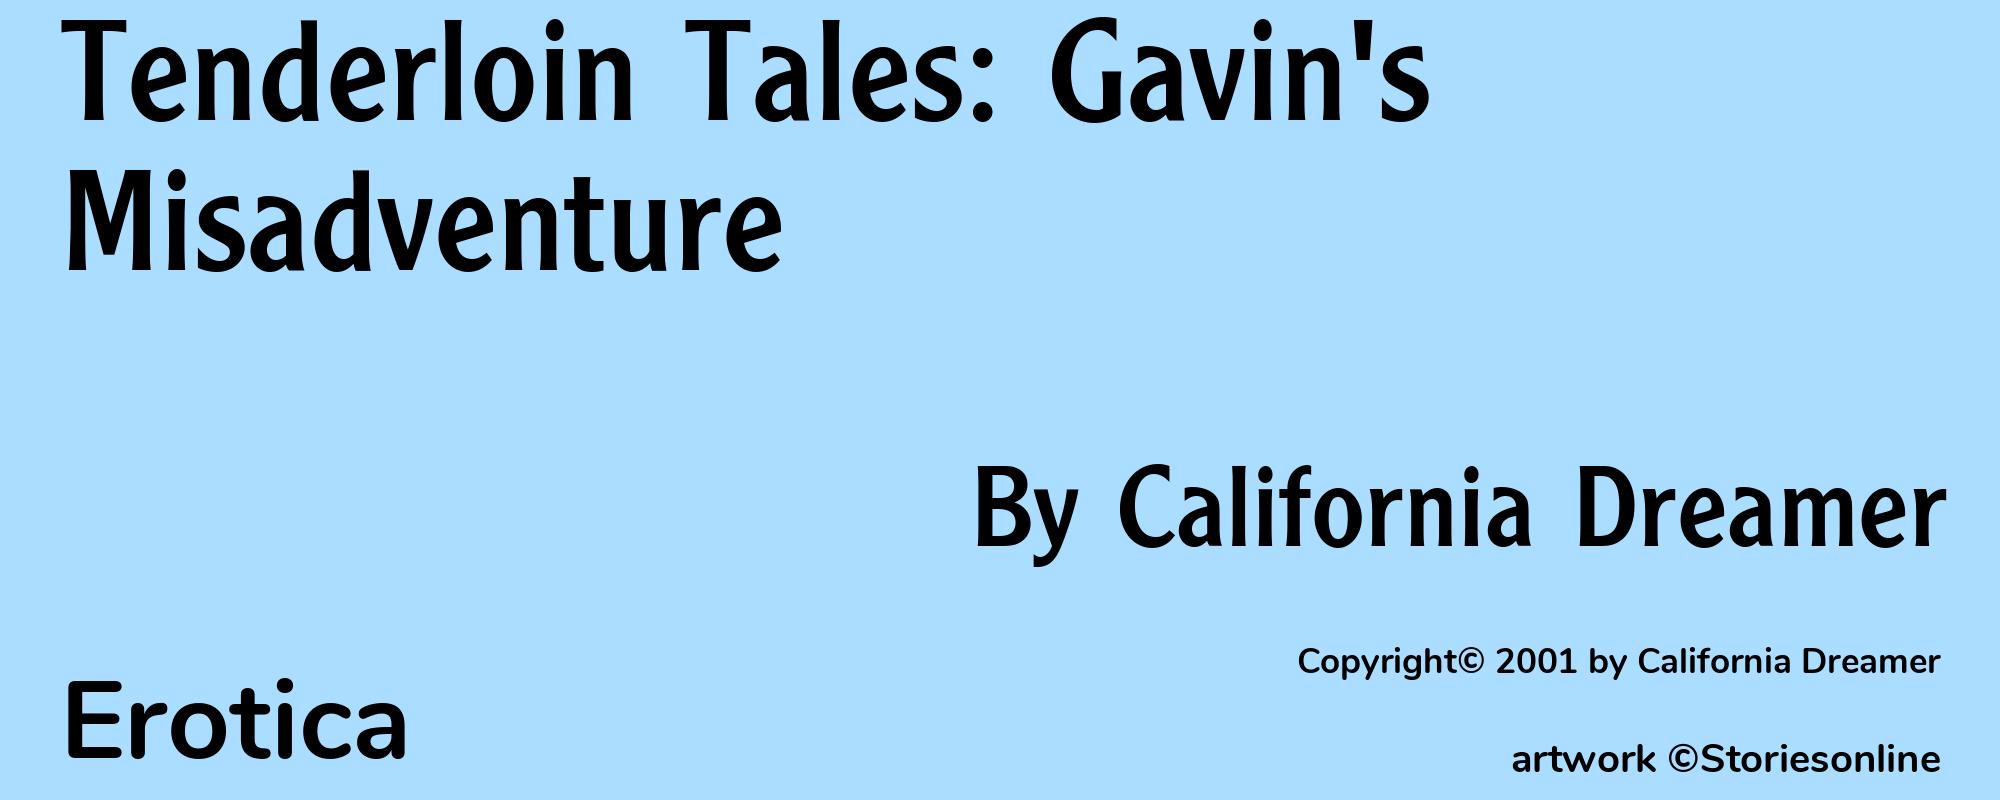 Tenderloin Tales: Gavin's Misadventure - Cover